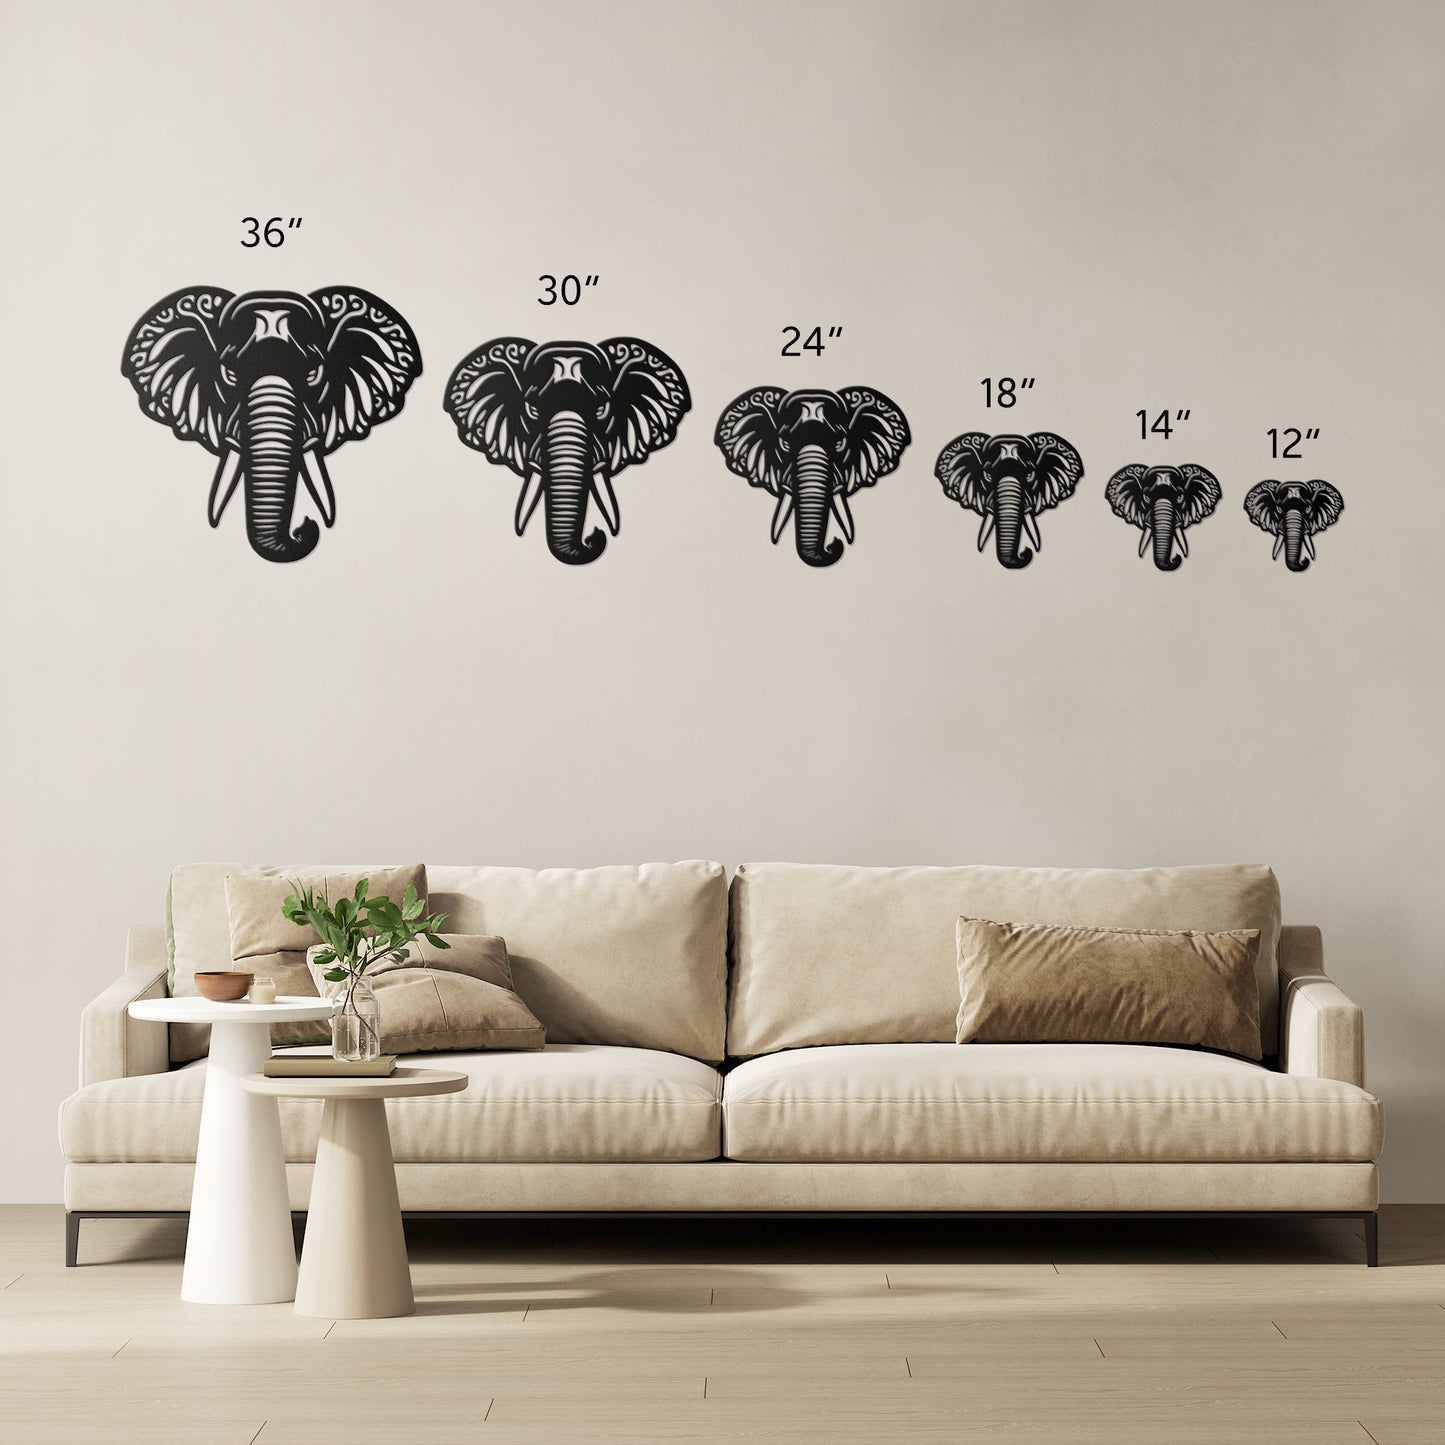 Wild Animals - Die-Cut Metal Wall Art - Elephant #4